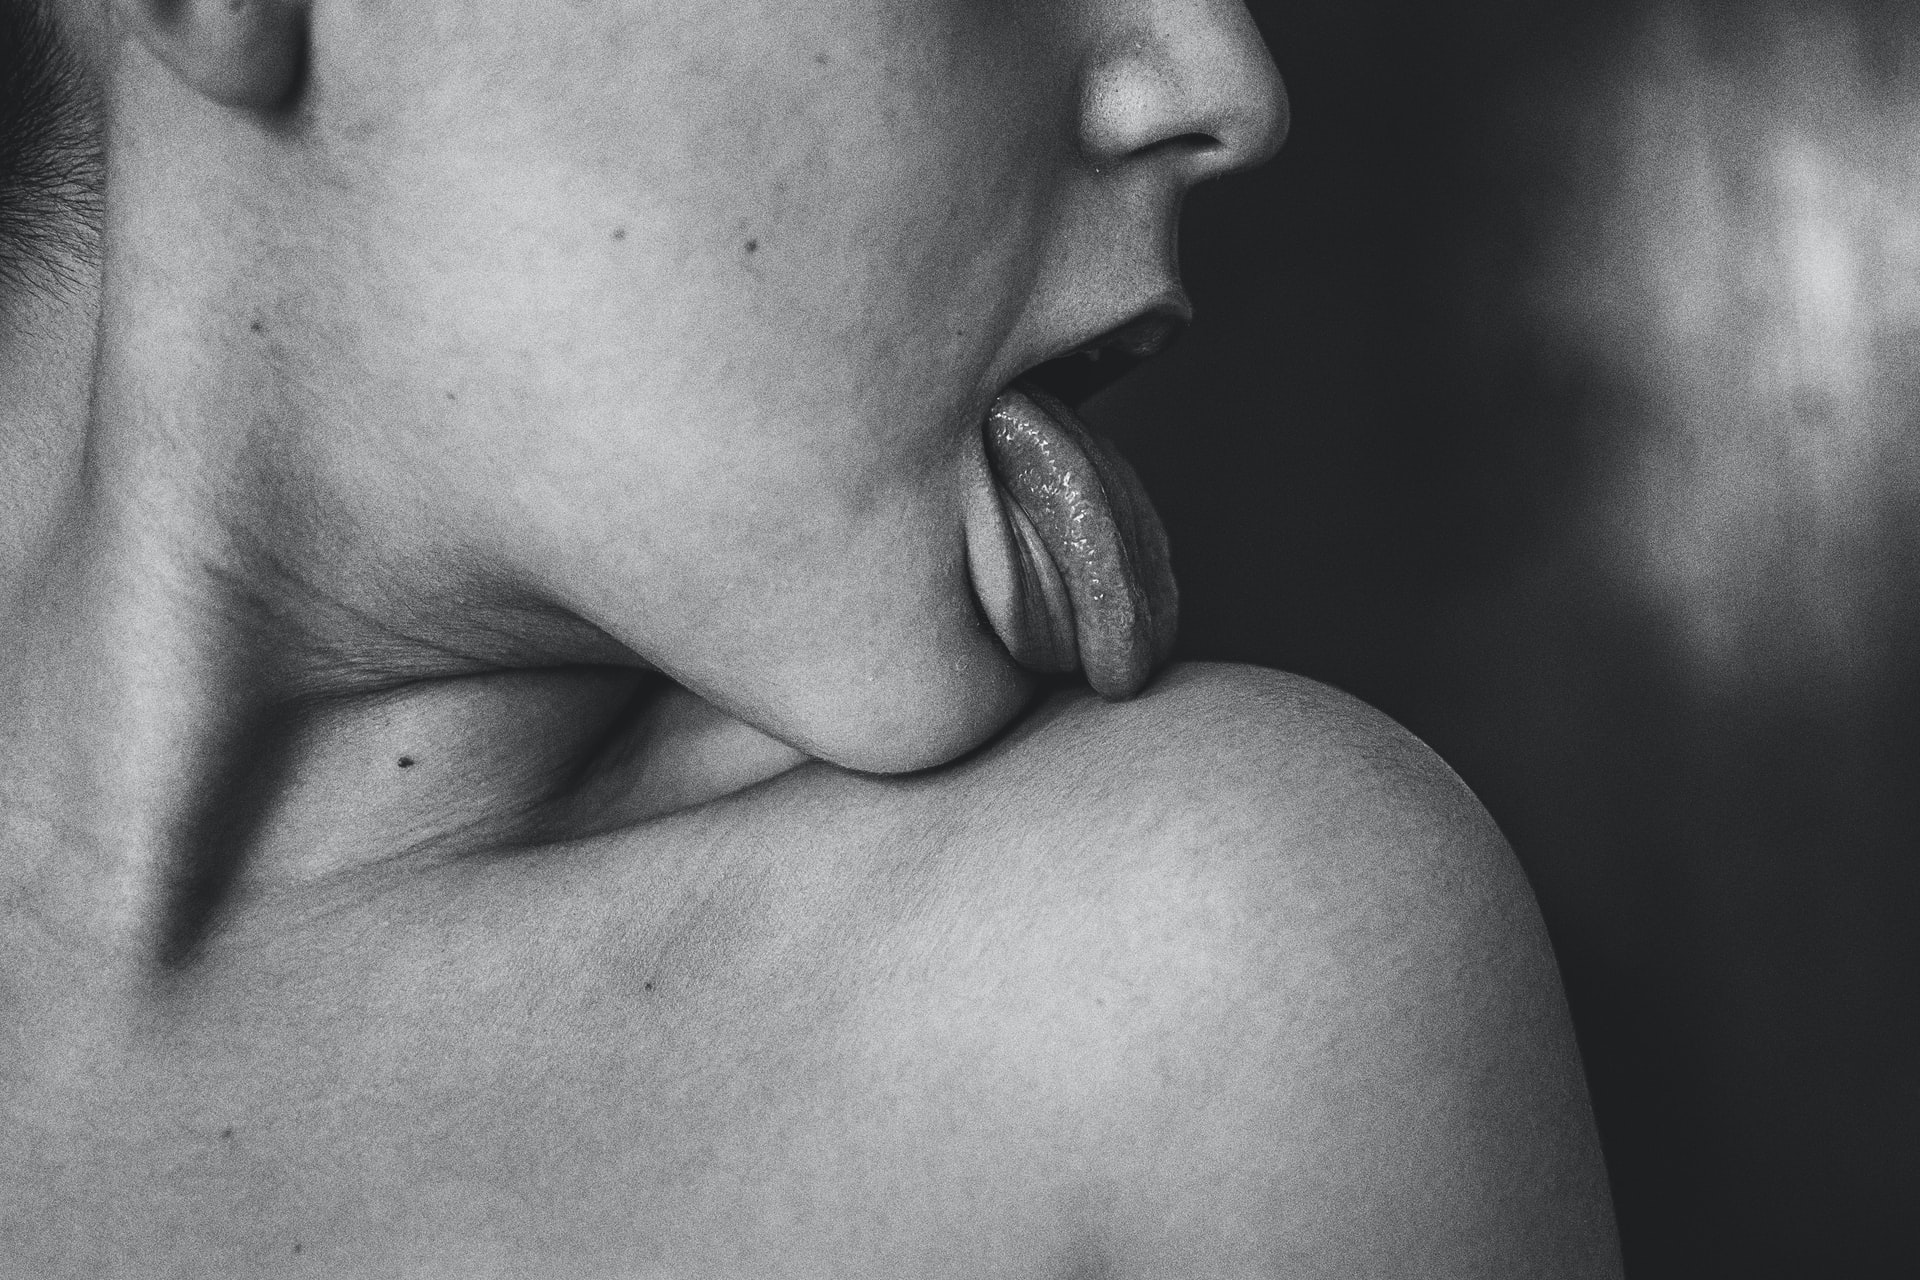 Licking X